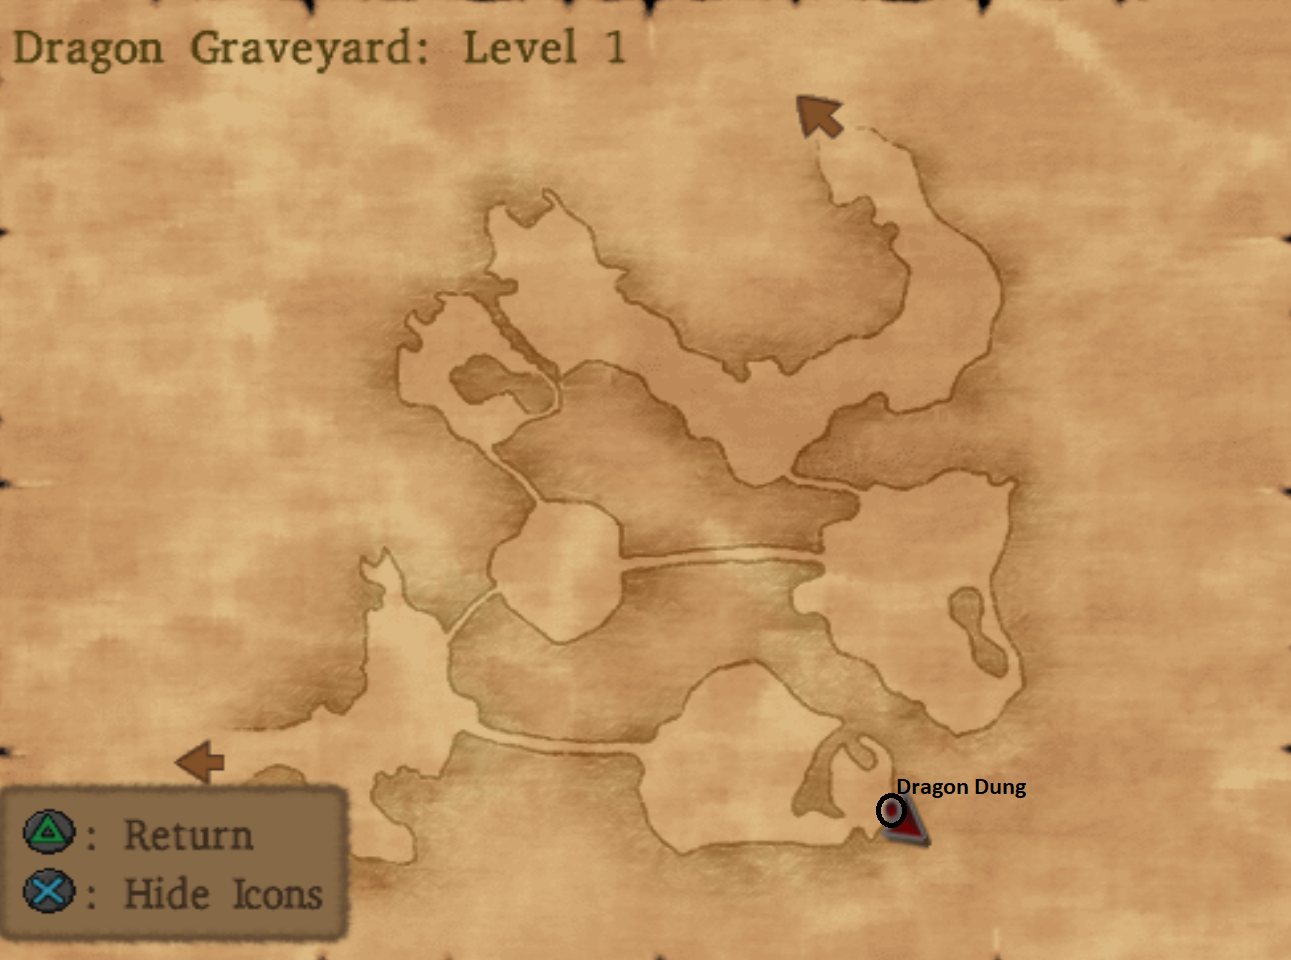 Map of Dragon Graveyard and Treasure